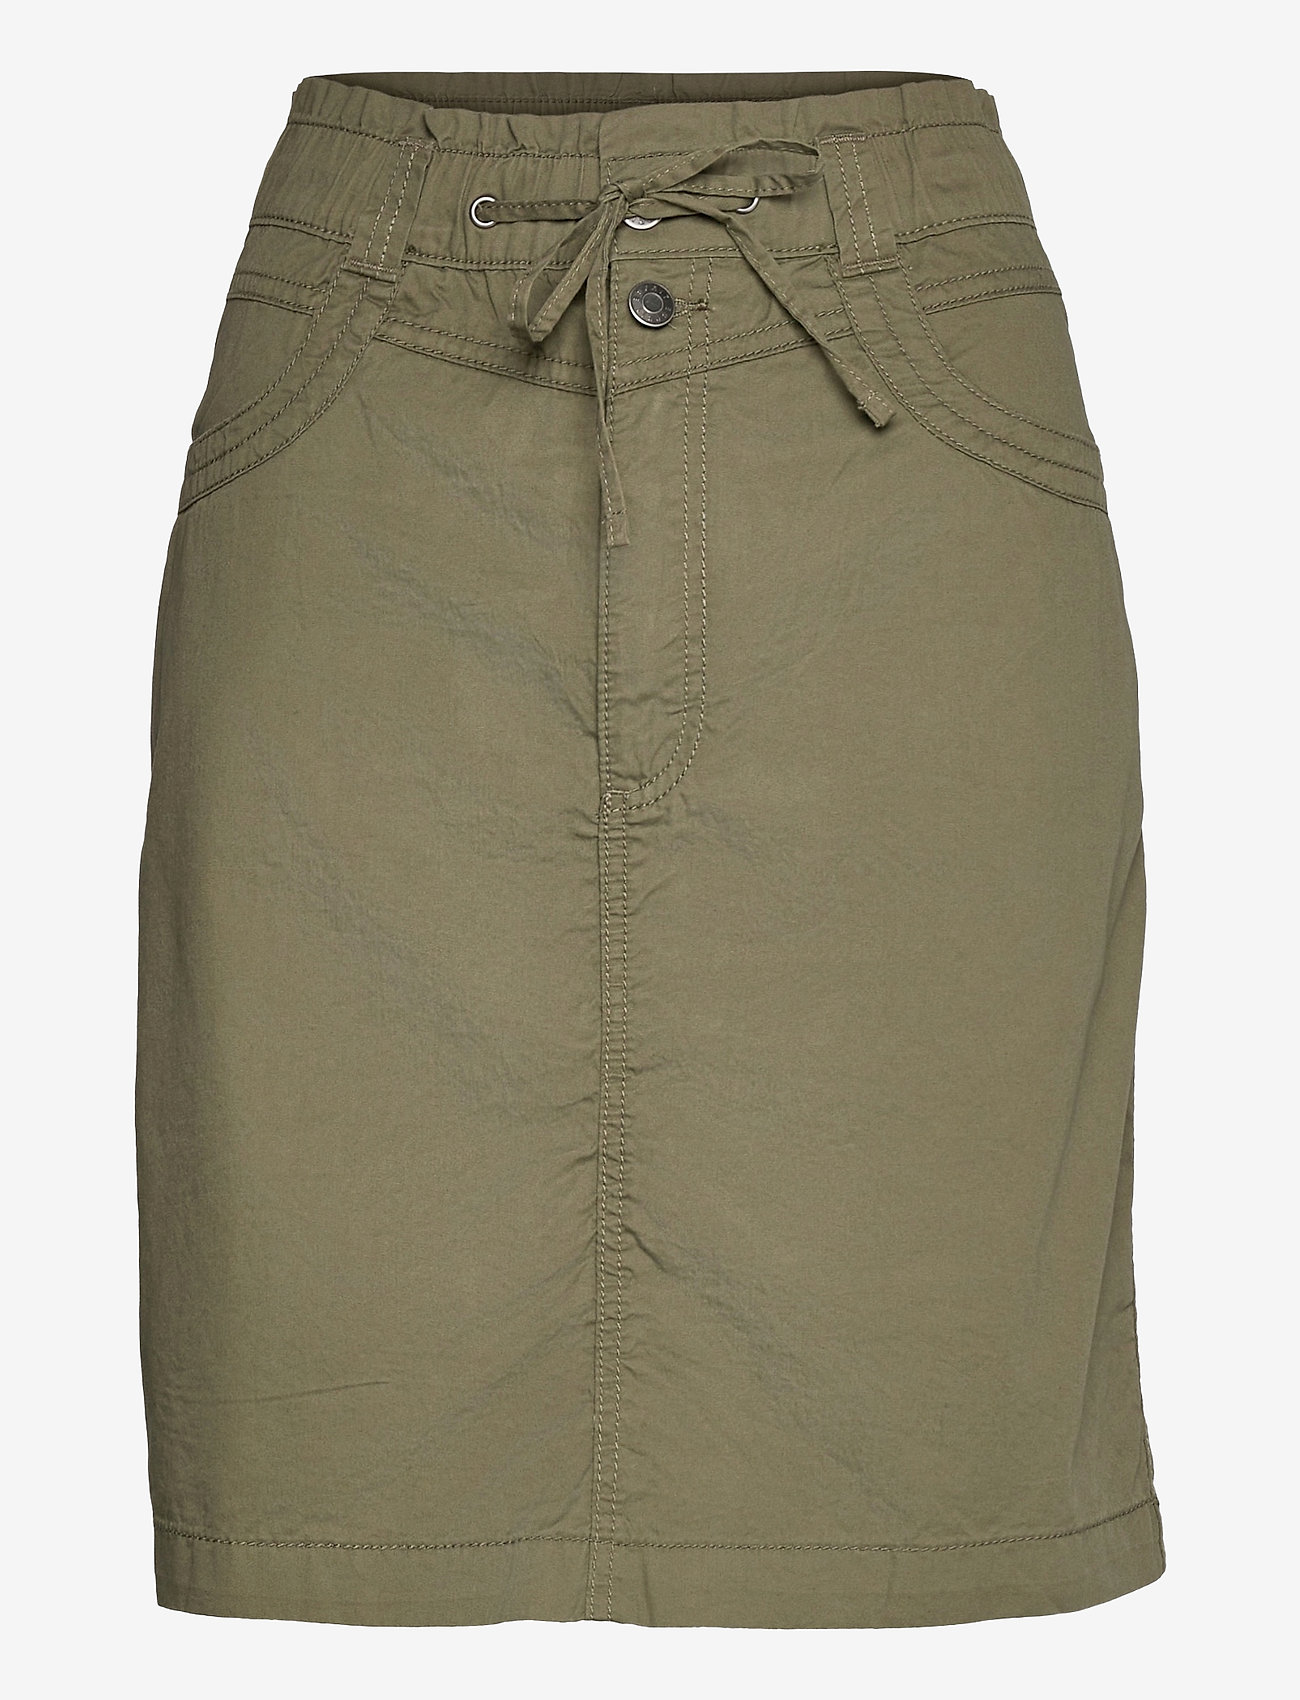 Esprit Casual - PLAY mini skirt made of 100% organic cotton - korte rokken - khaki green - 0